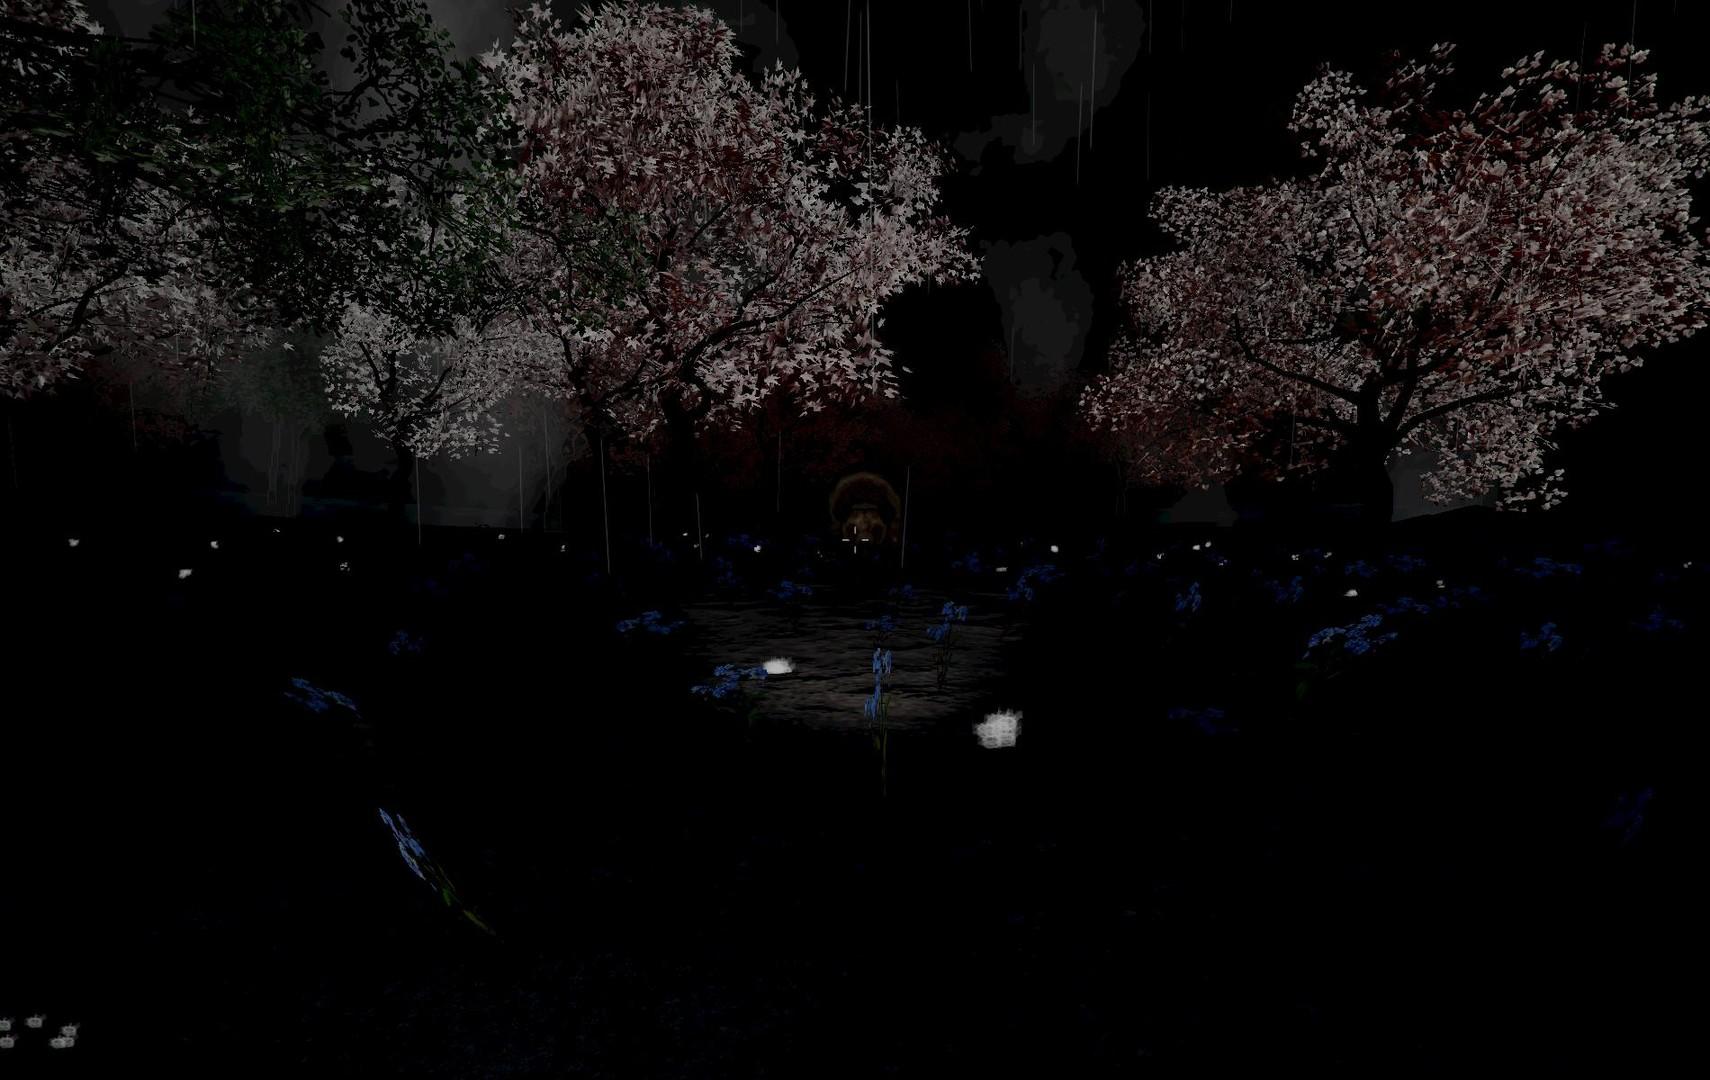 Screenshot №4 from game Red Wake Carnage